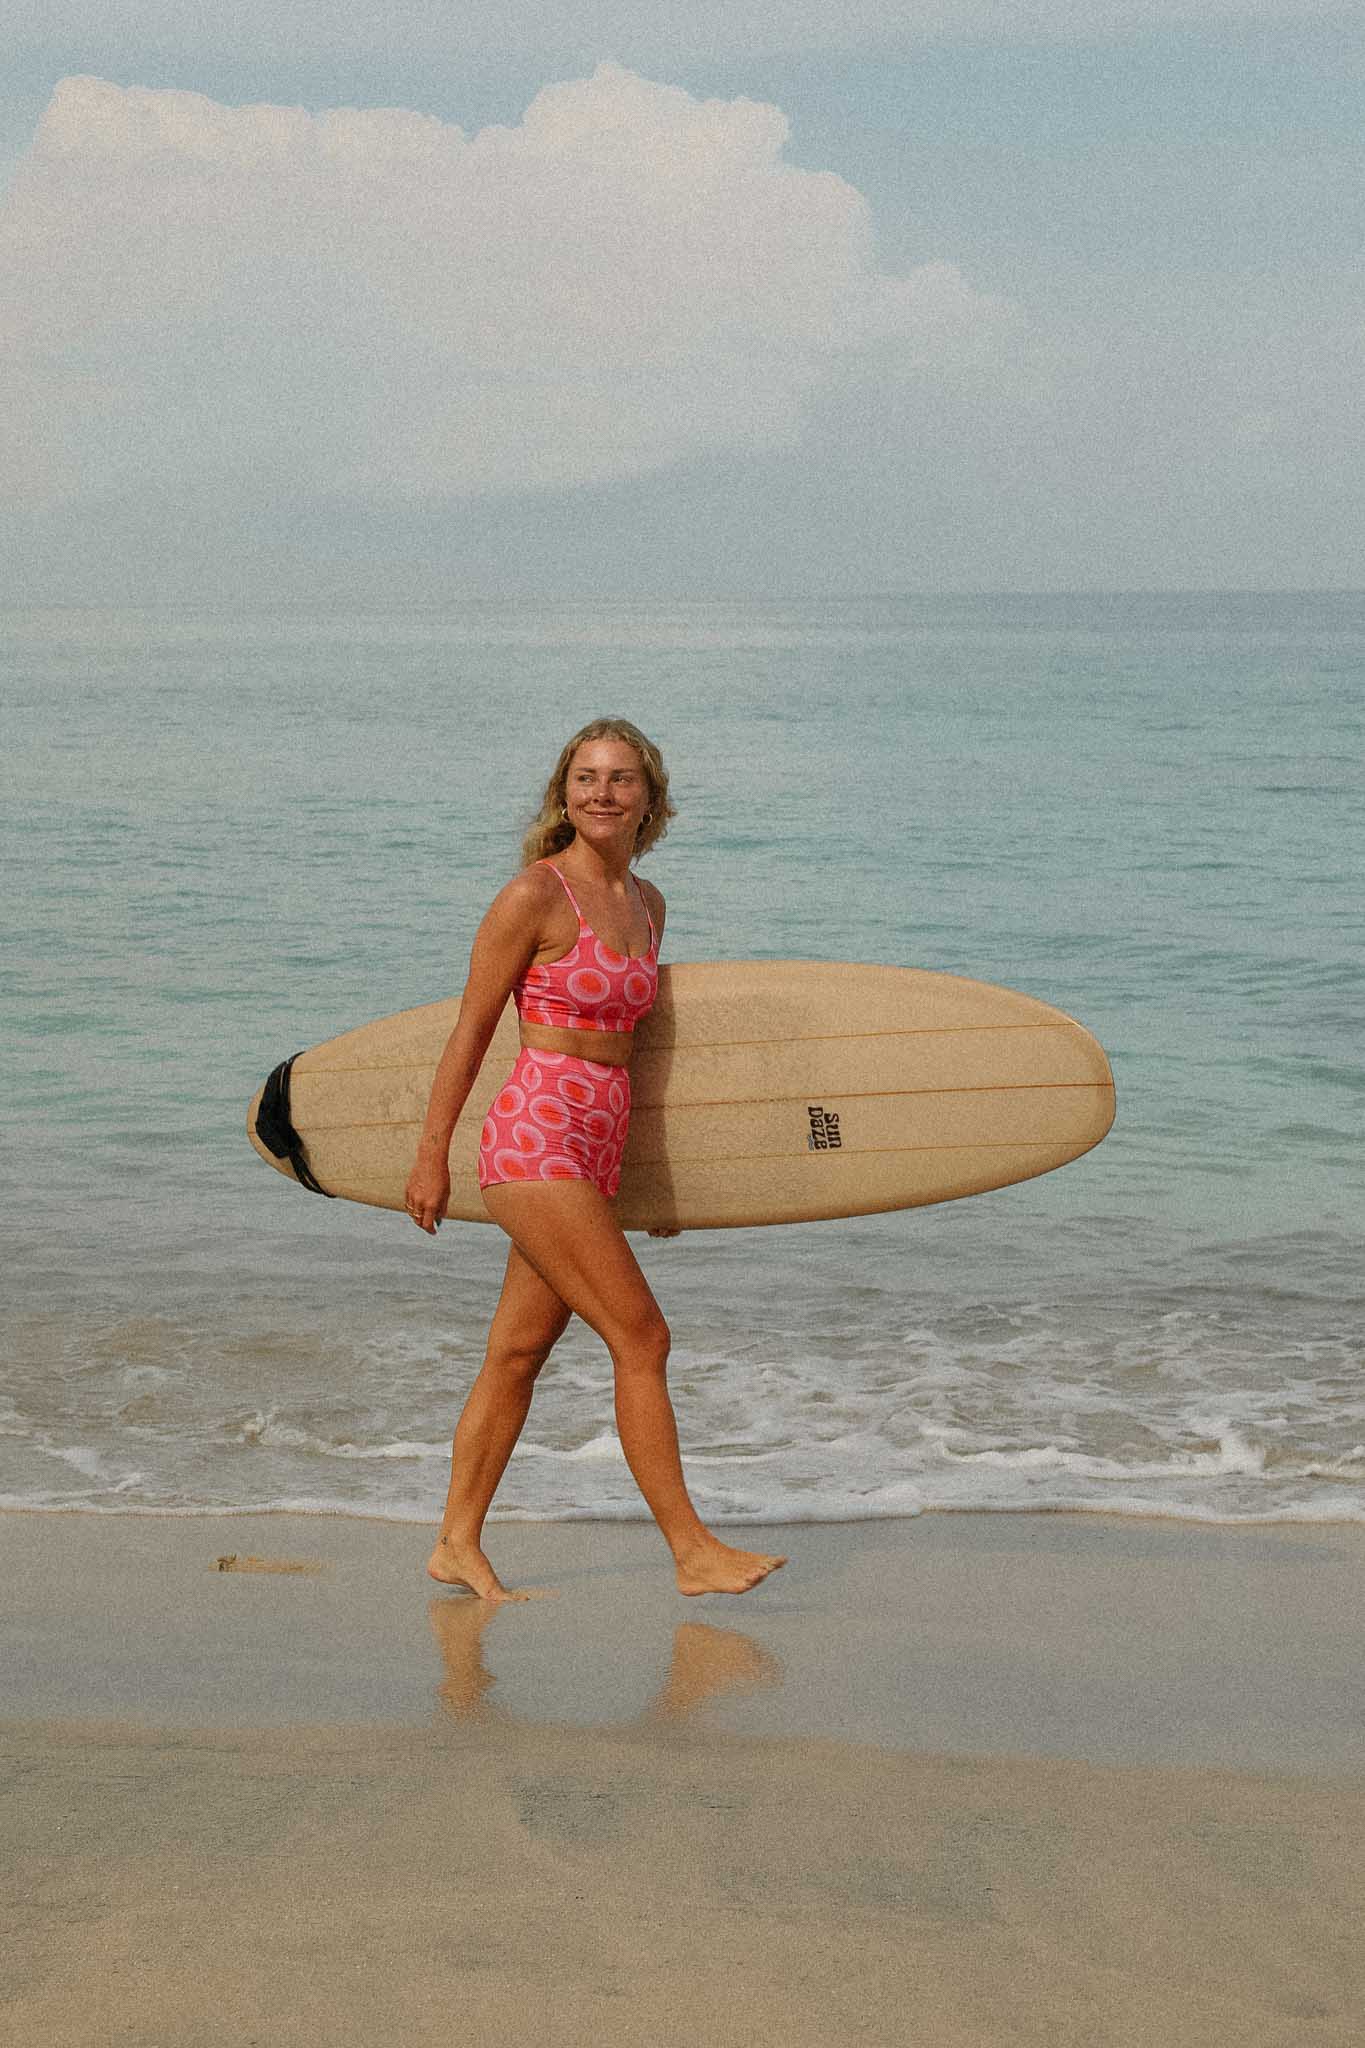 model walking on the beach with her surfboard wearing the watermelon bikini